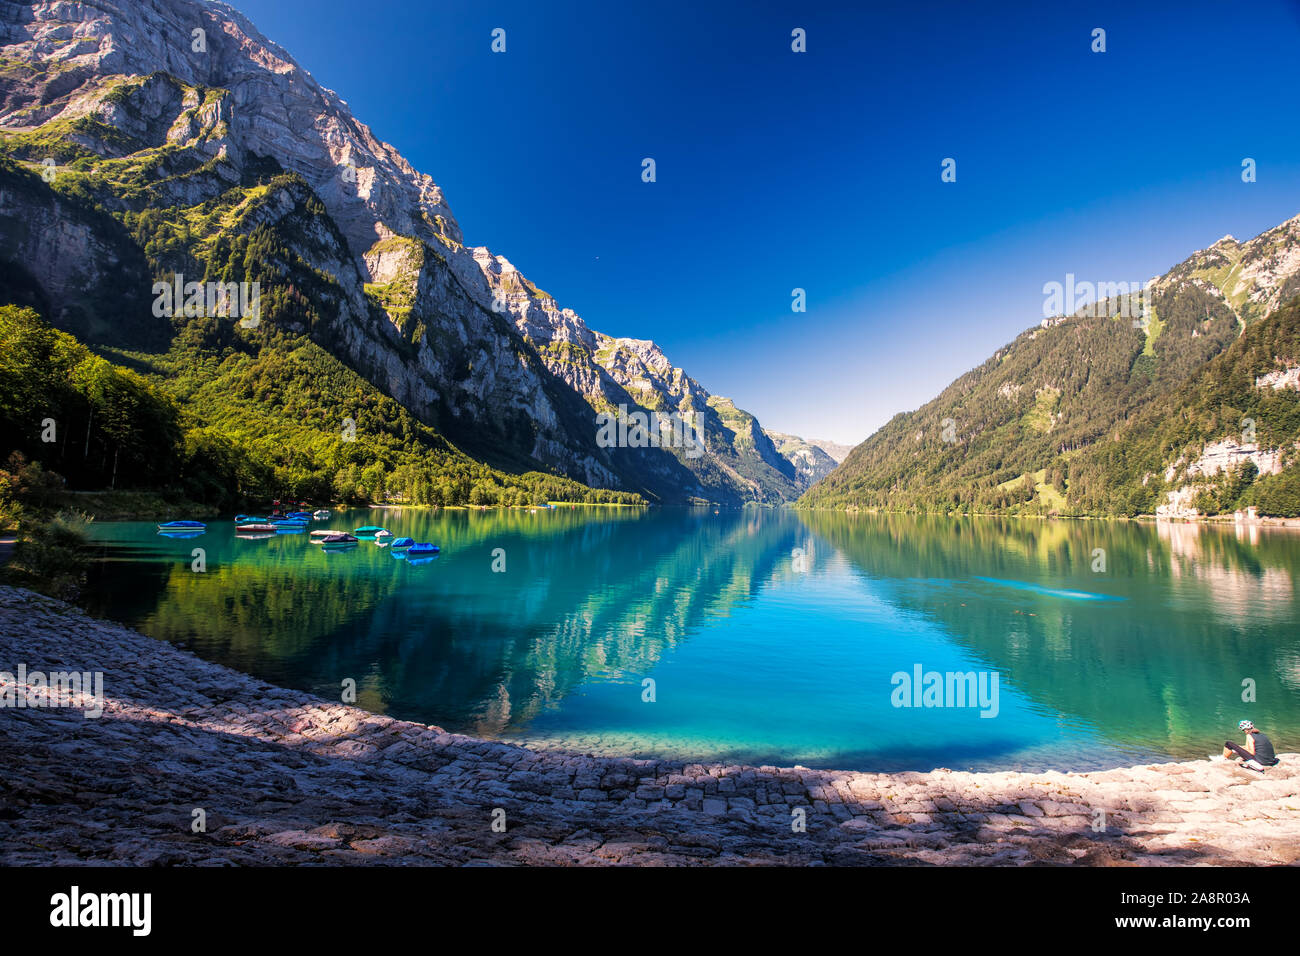 Klontalersee (Lake Klontal) in Swiss Alps, Glarus, Switzerland, Europe. Stock Photo